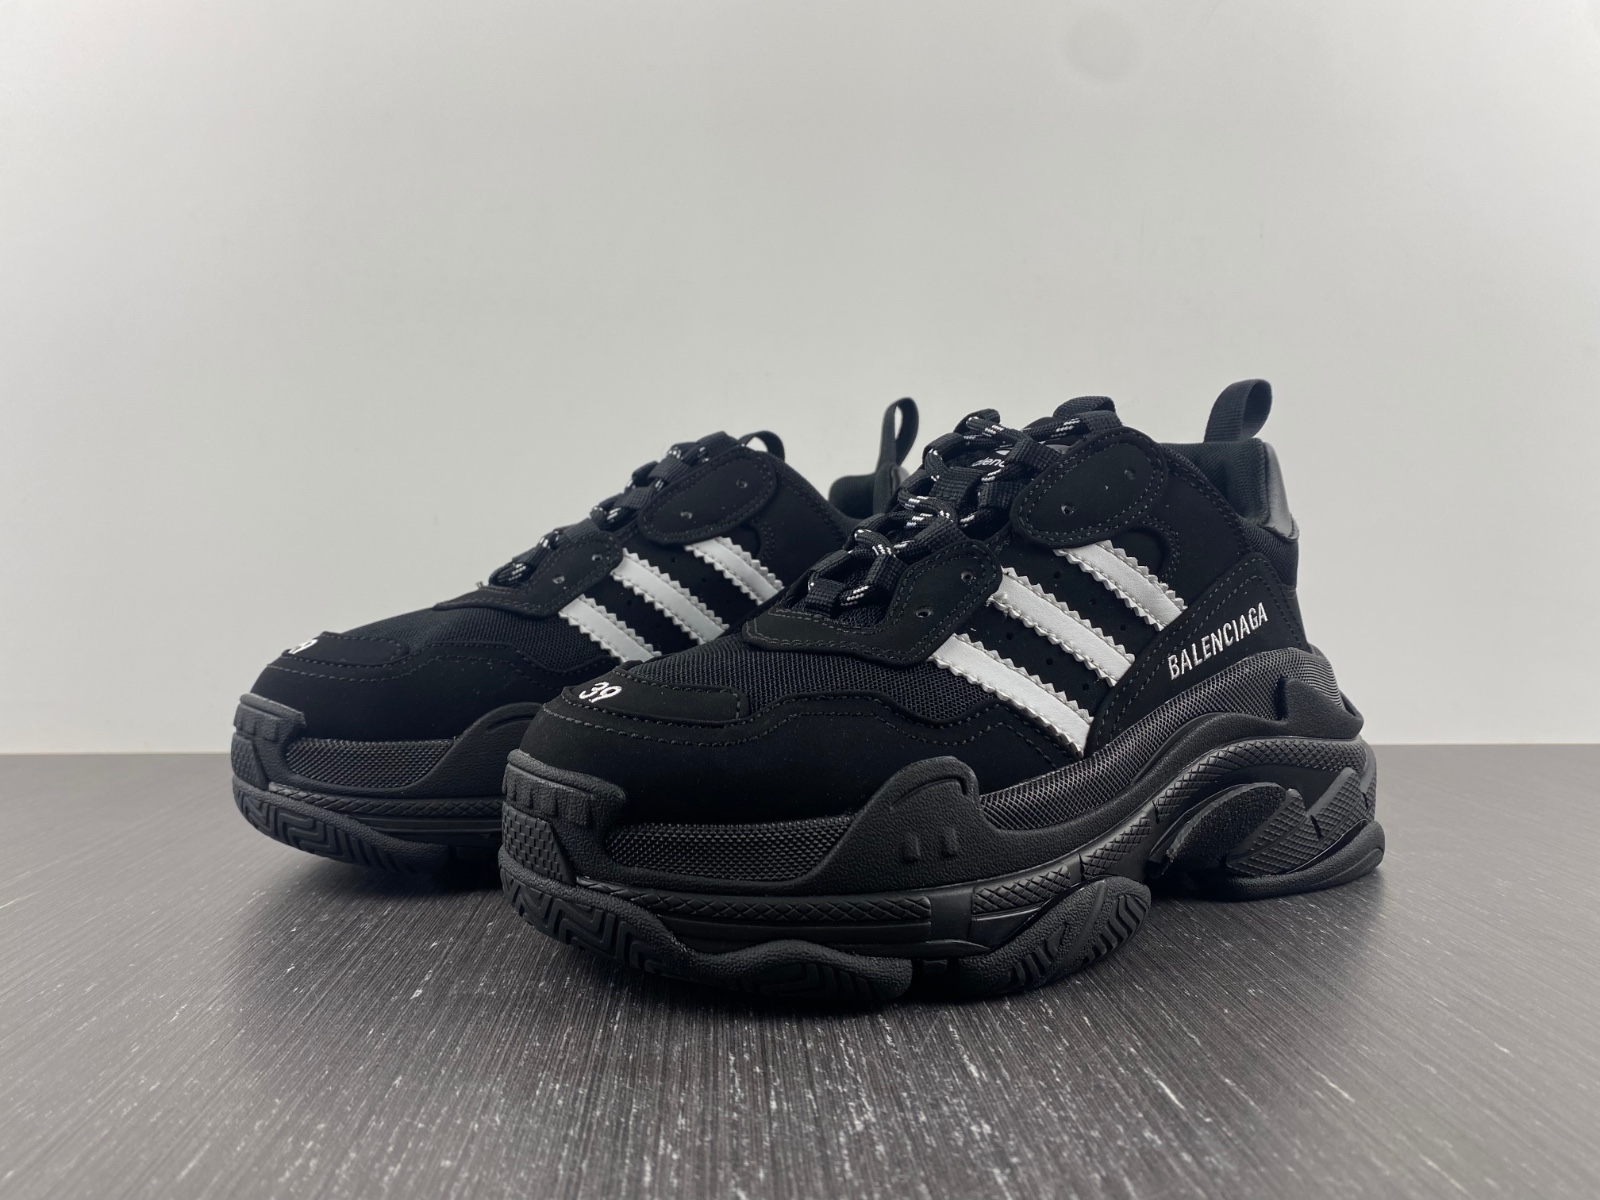 Balenciaga X Adidas Triple S Limited Edition Sneakers Black